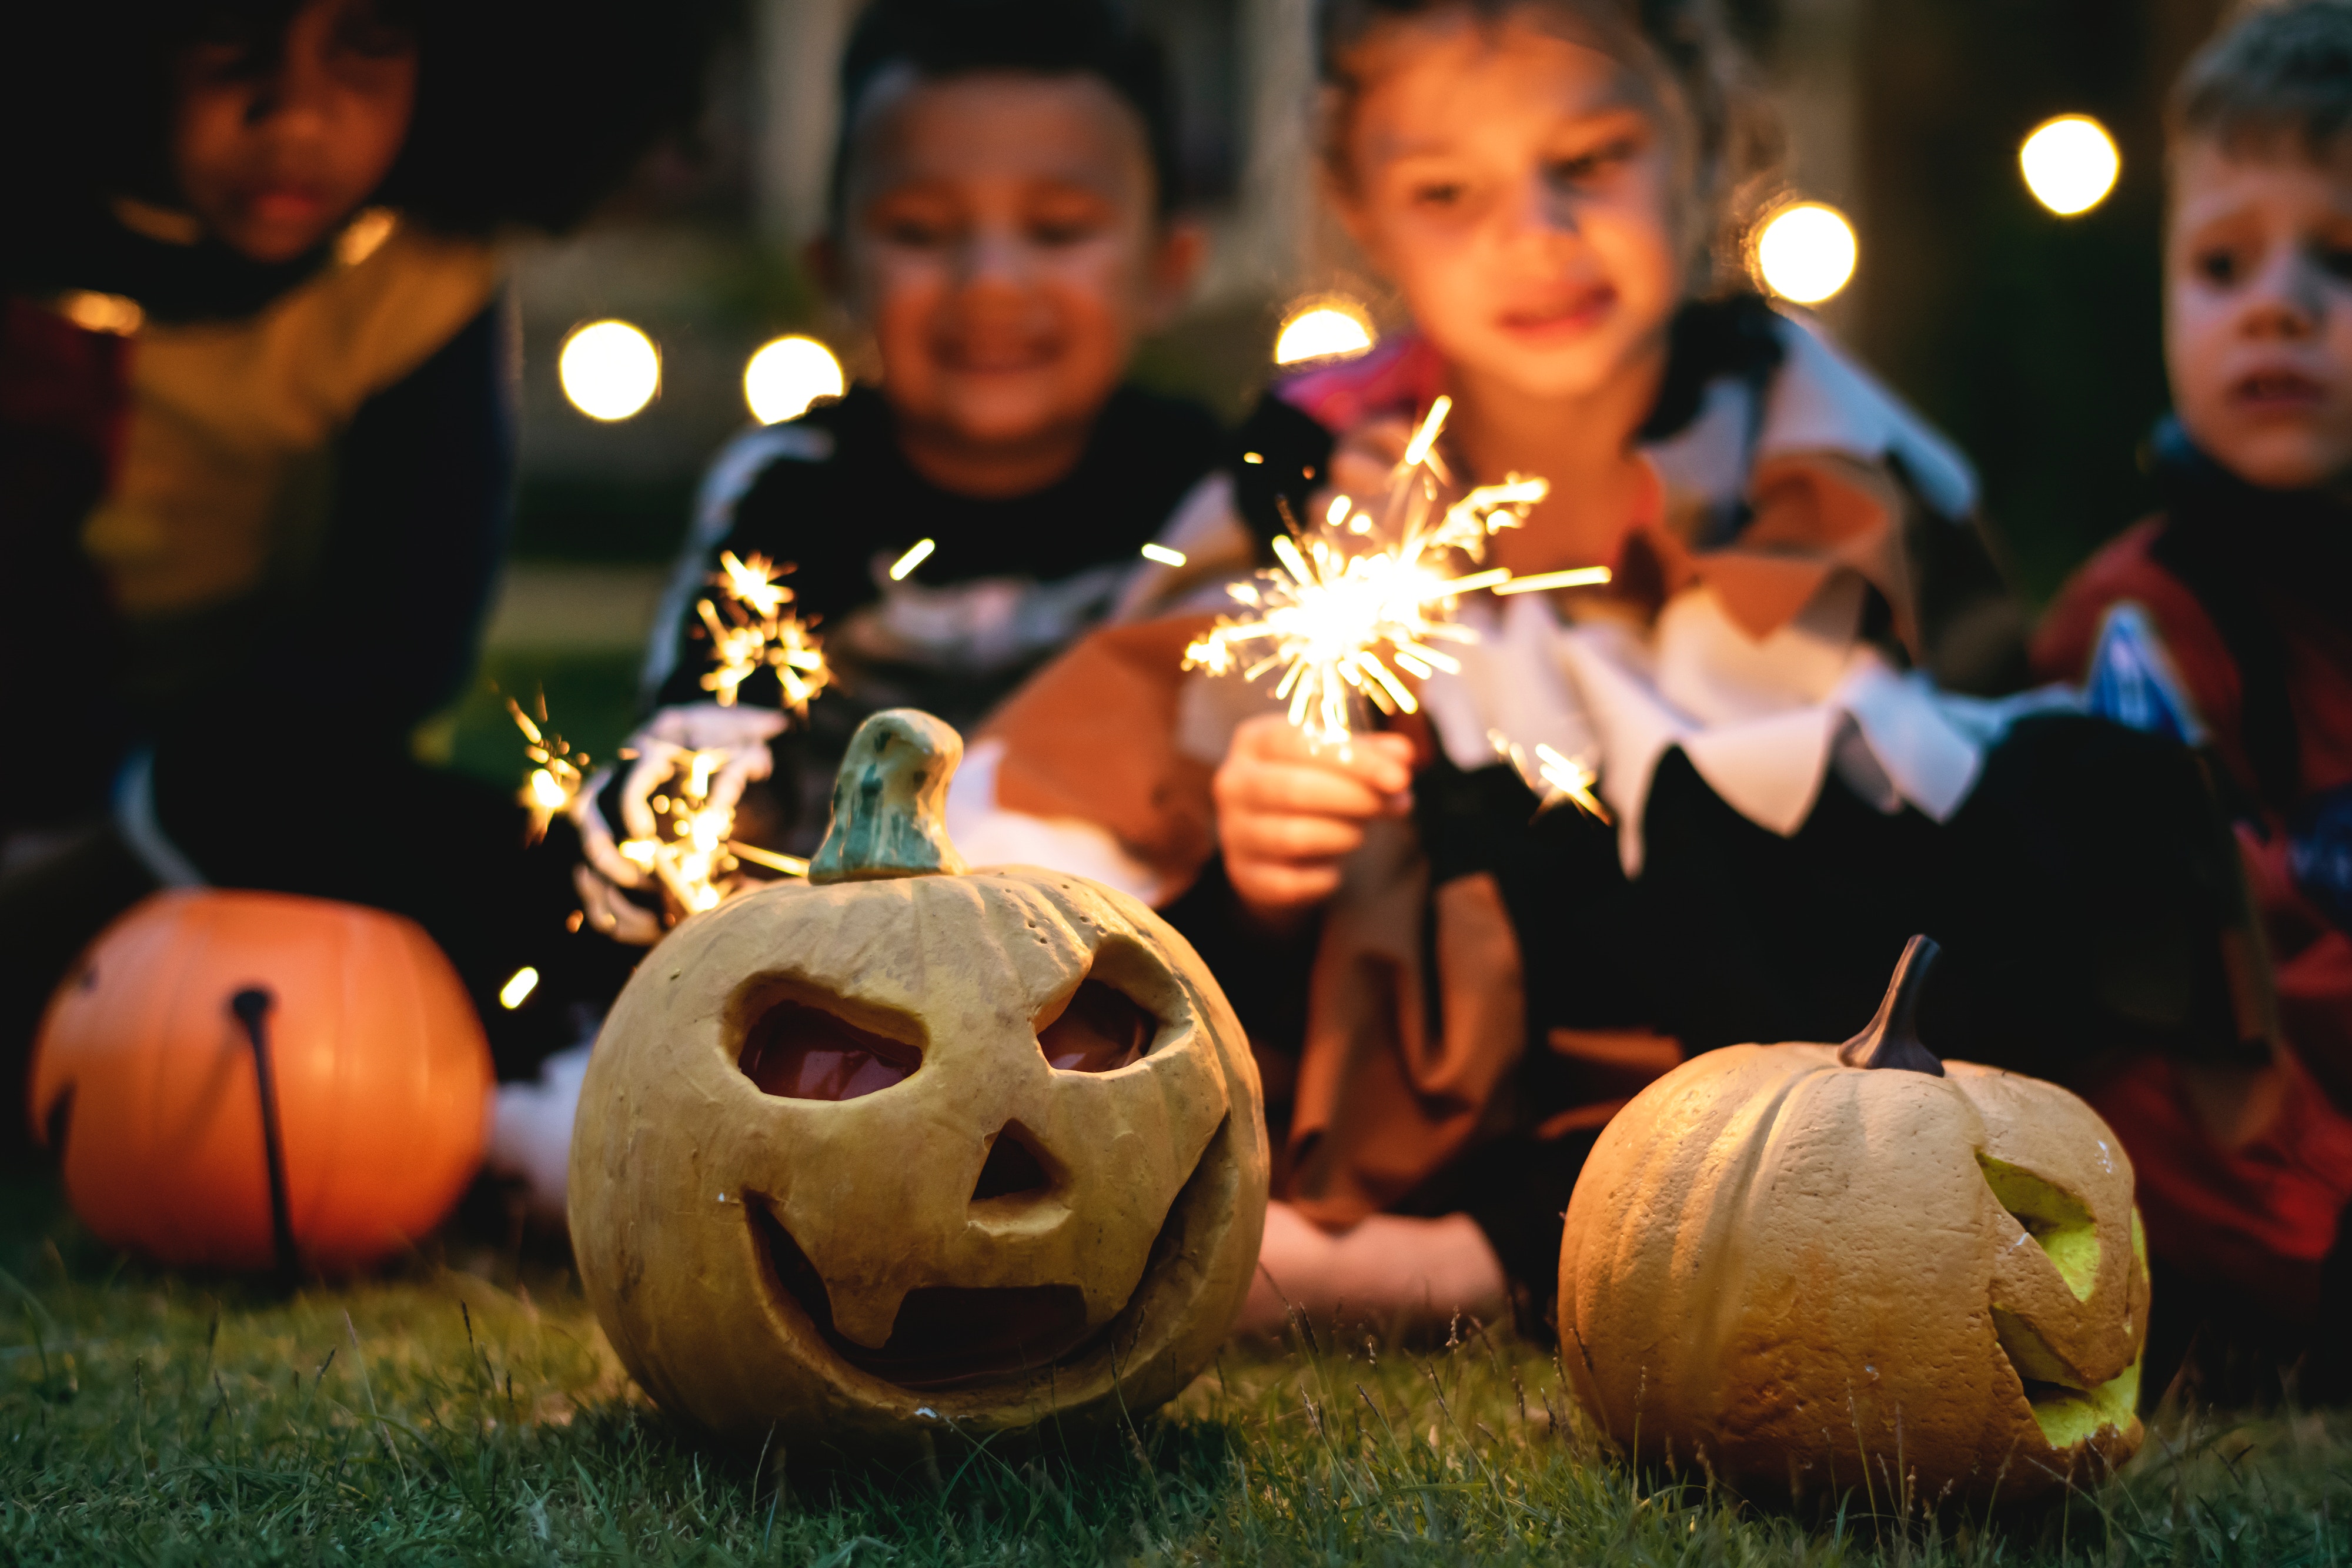 children with sparklies and jack o' lanterns on Halloween